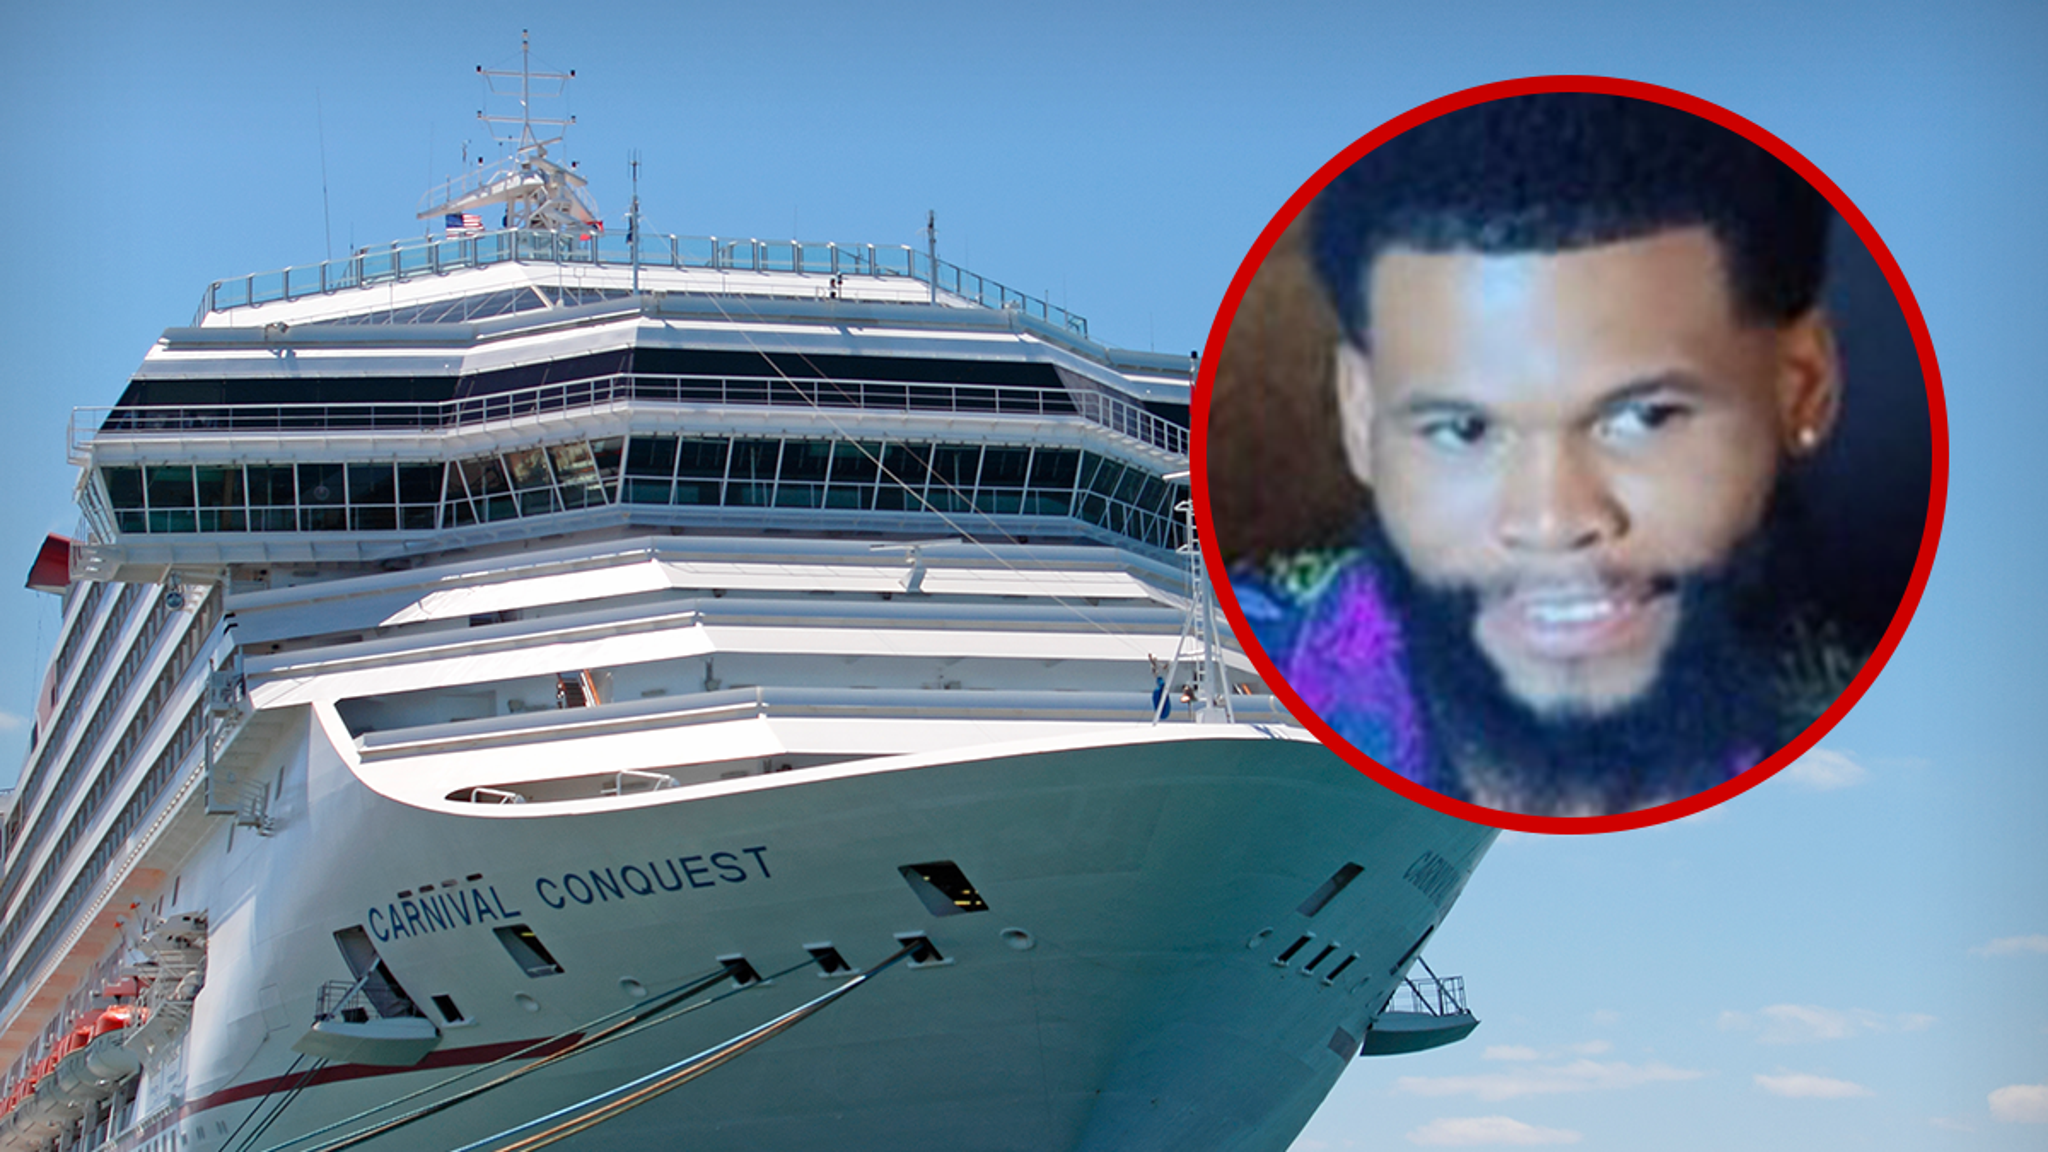 Missing Carnival Cruise Passenger On Probation When He Vanished, Officials Skeptical